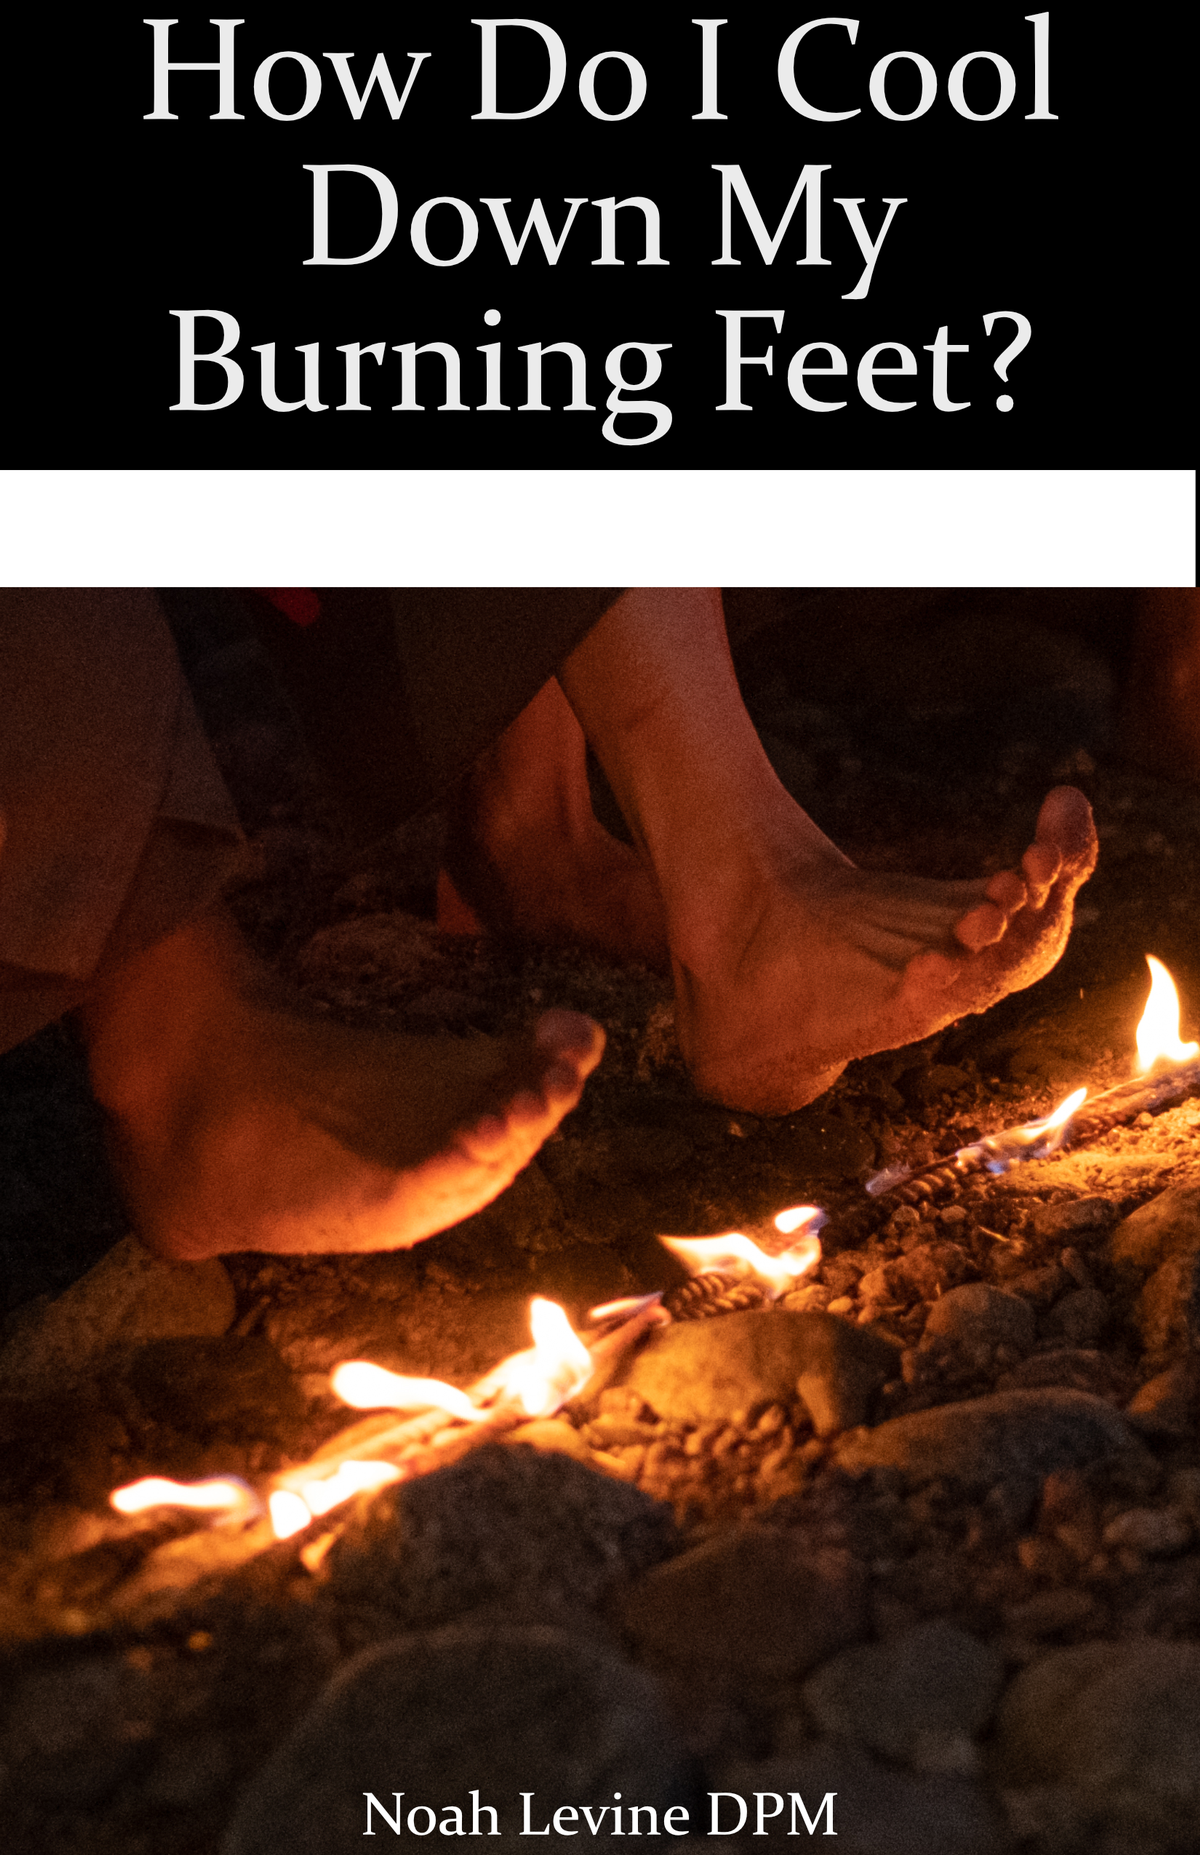 My feet are burning!